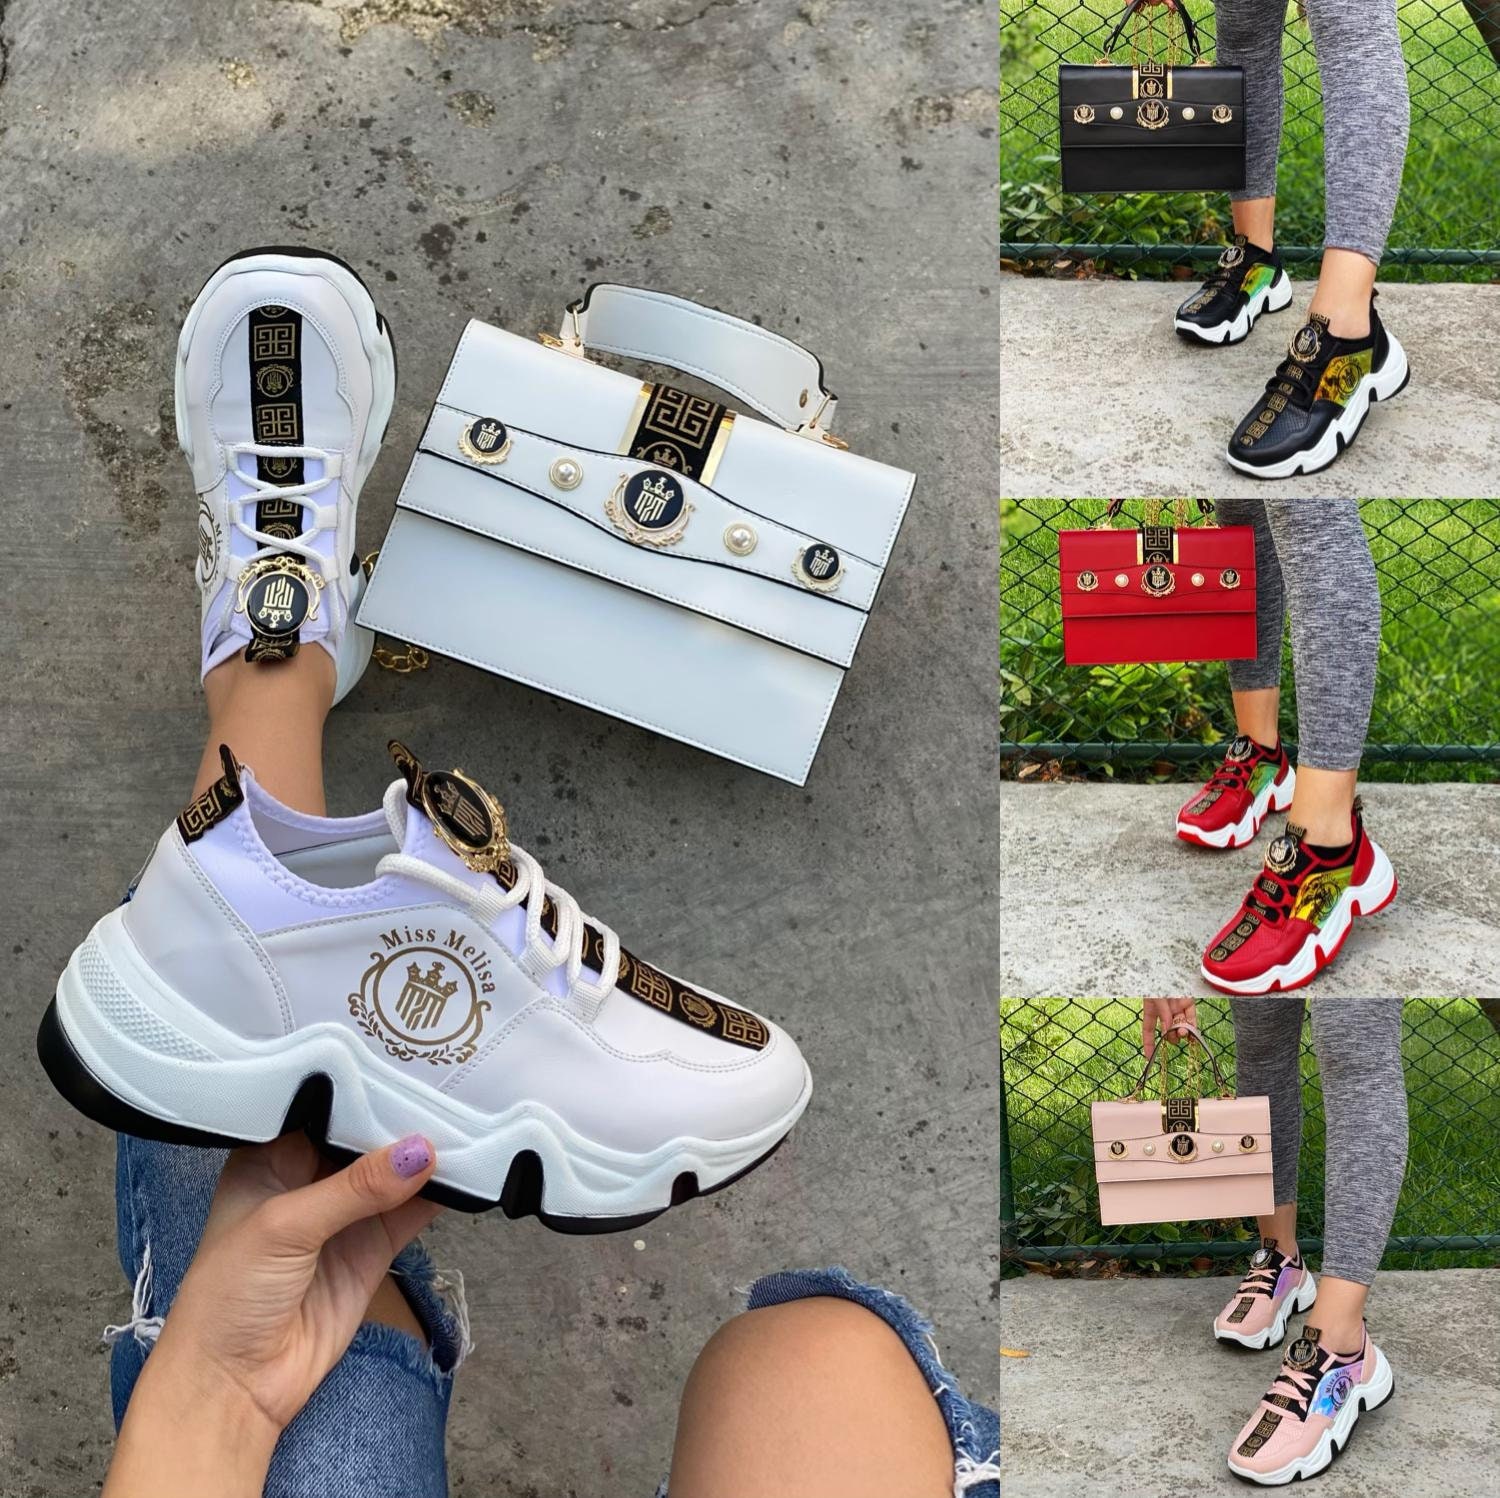 Miss Melisa Shoe and Bag New Louis Vuitton Sneakers bag set s129